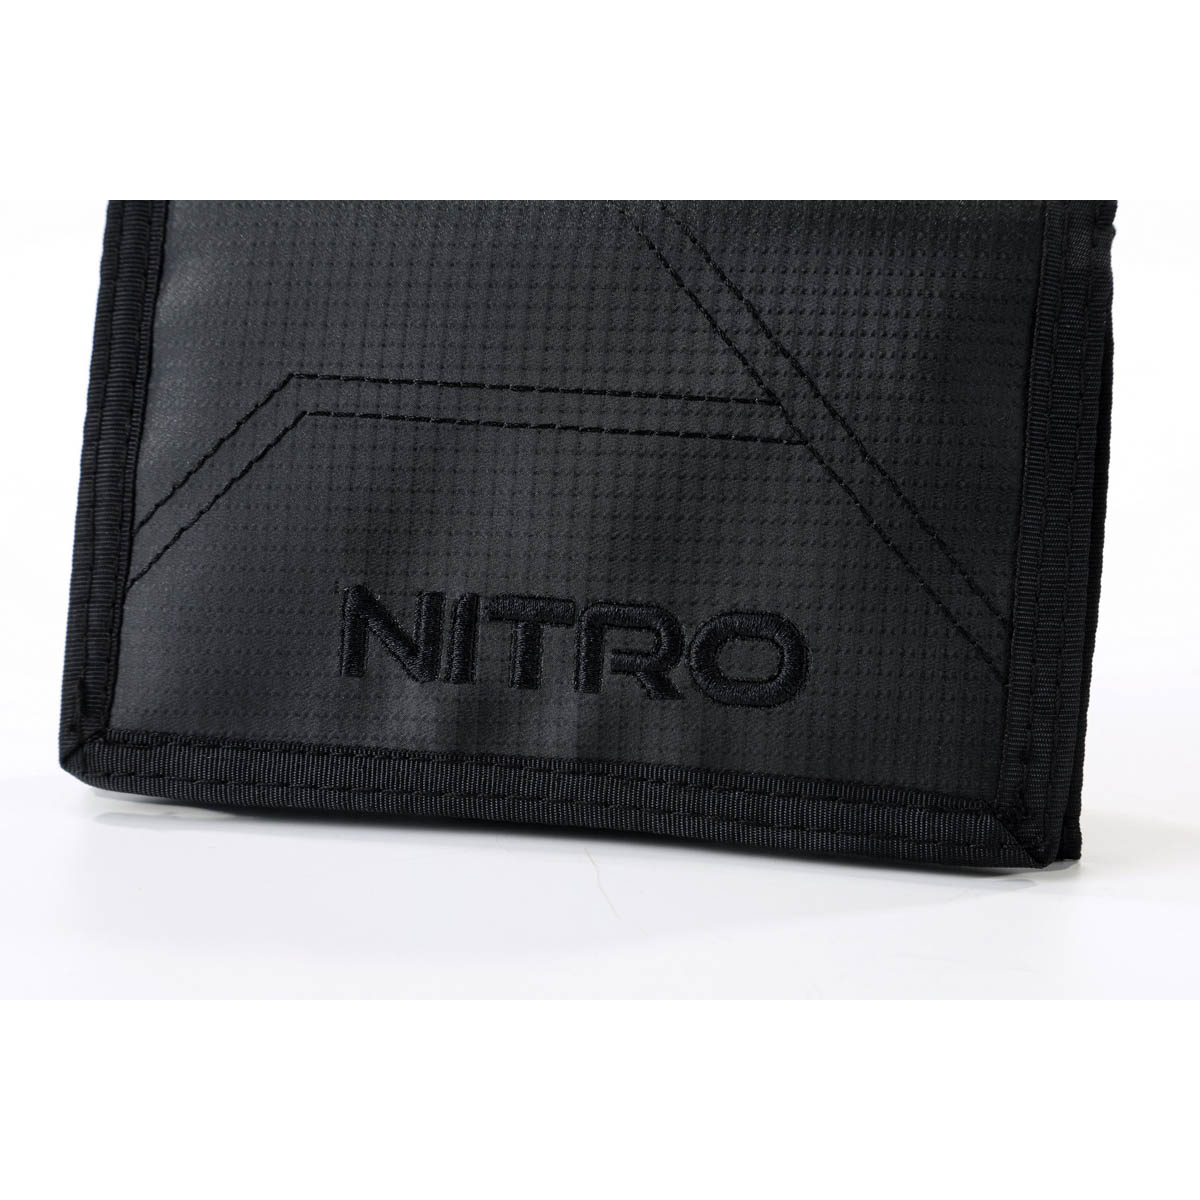 Nitro Geldbeutel Wallet - Nitrobags-Shop | Shop online bestellen Nitrobags